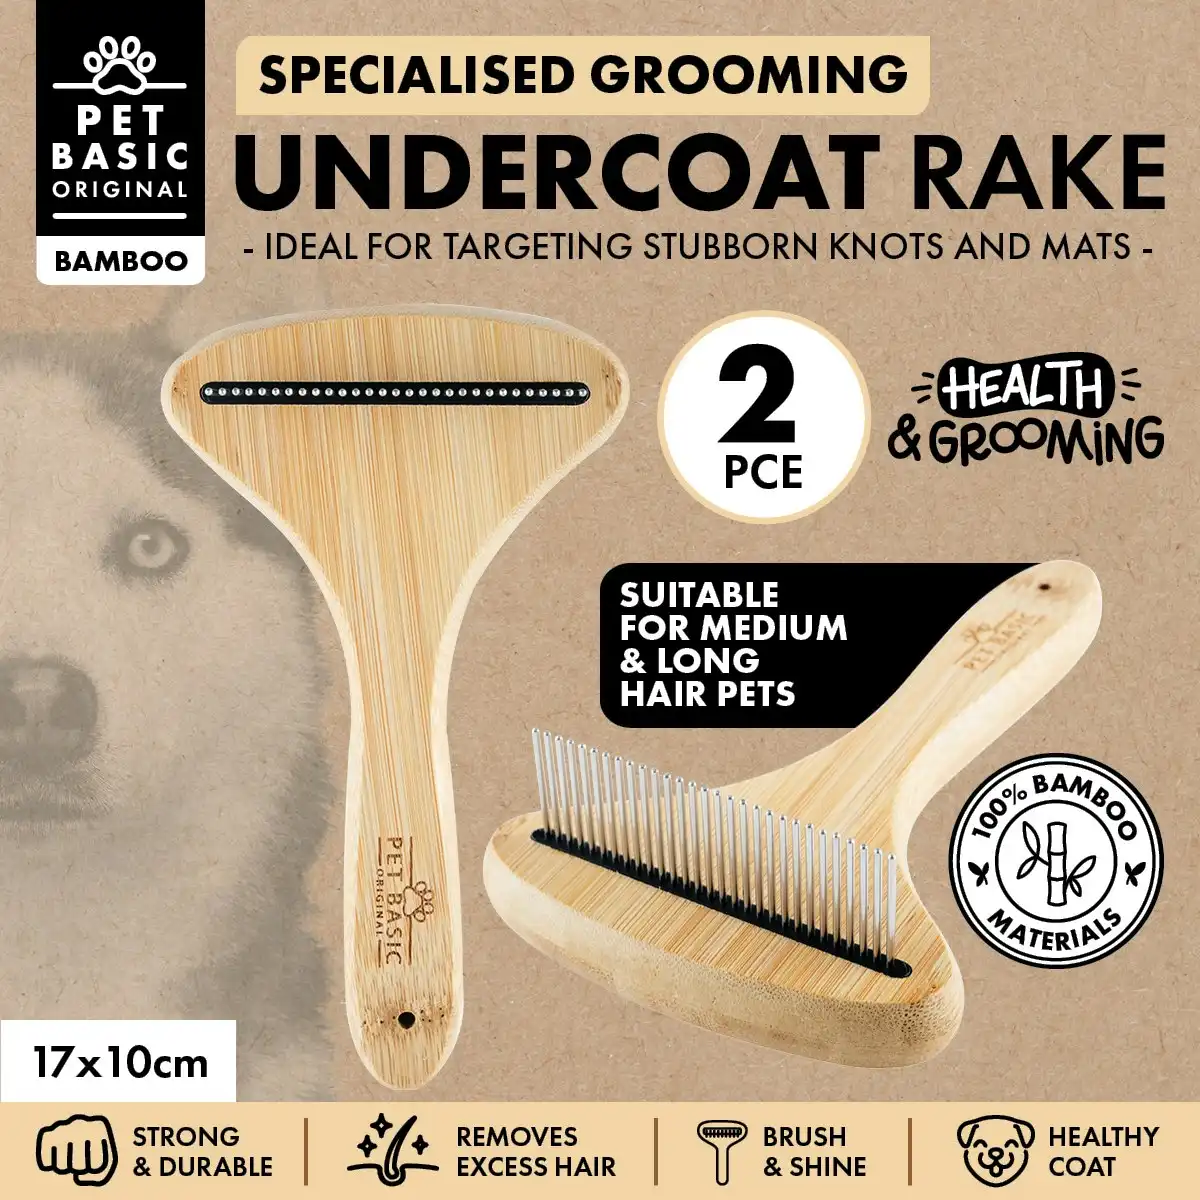 Pet Basic 2PCE Undercoat Comb Bamboo Design Detangle & Remove Excess Fur 17cm